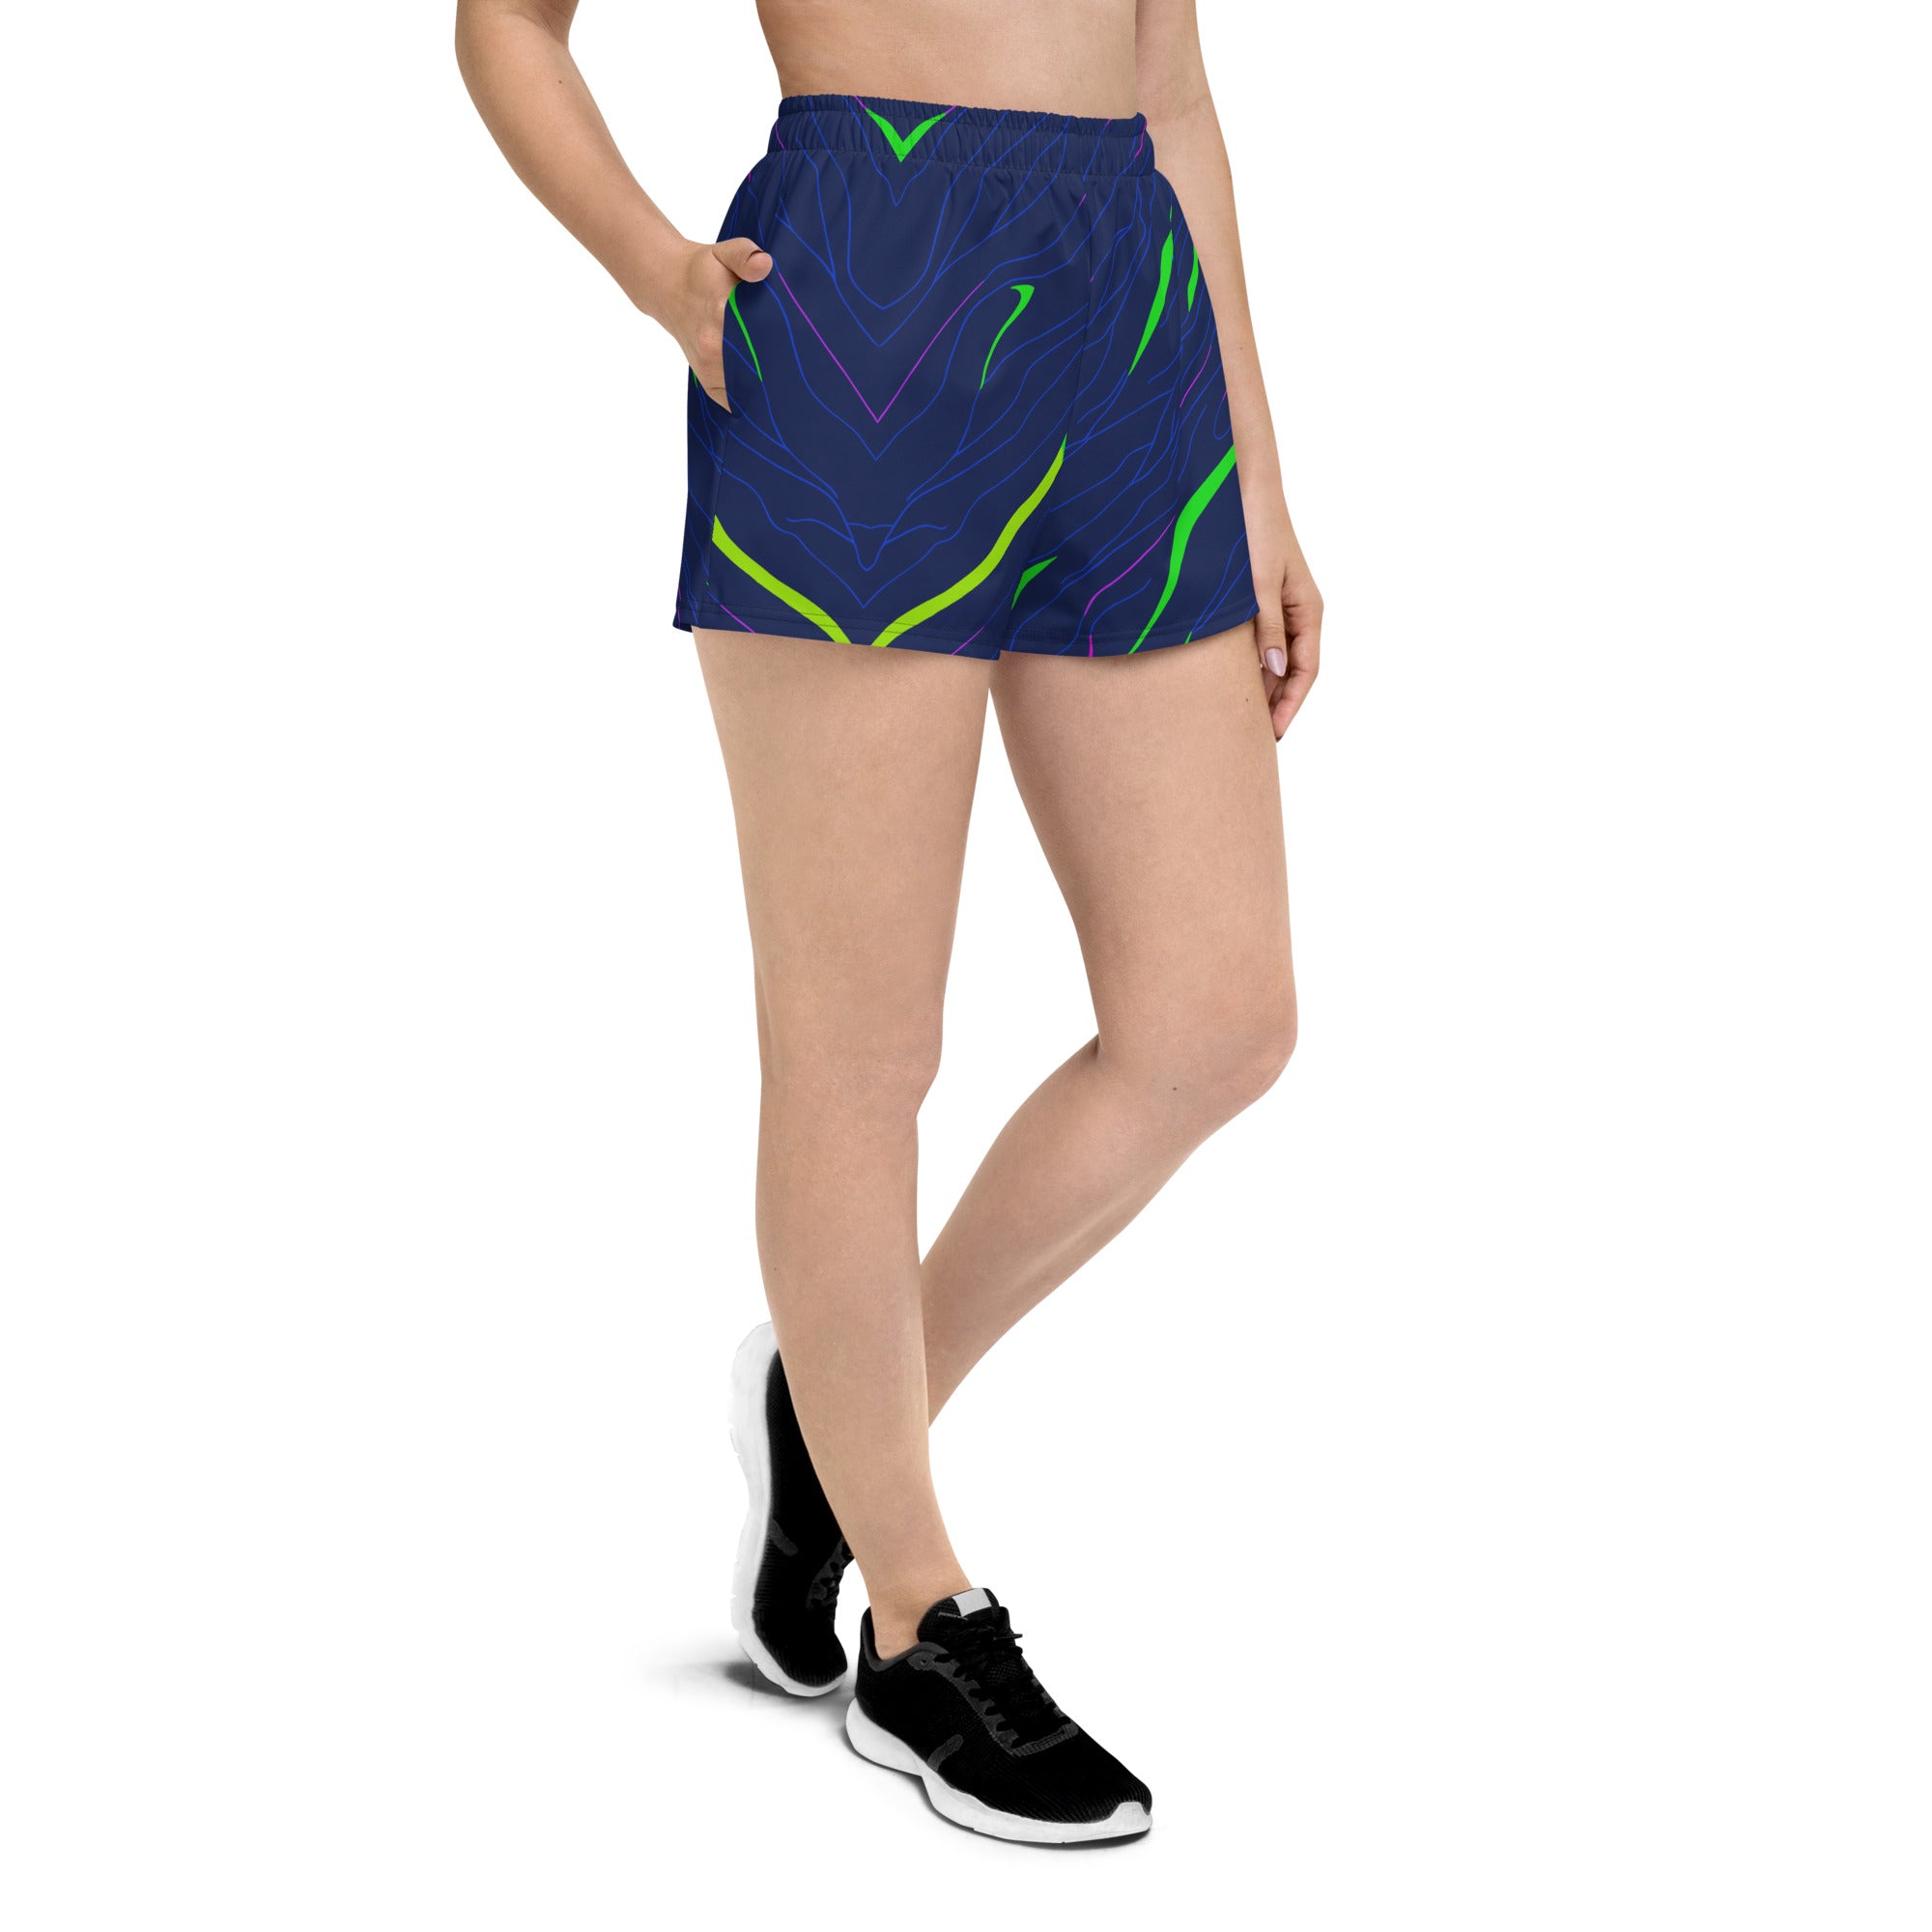 SORTYGO - Zephyr Women Athletic Short in